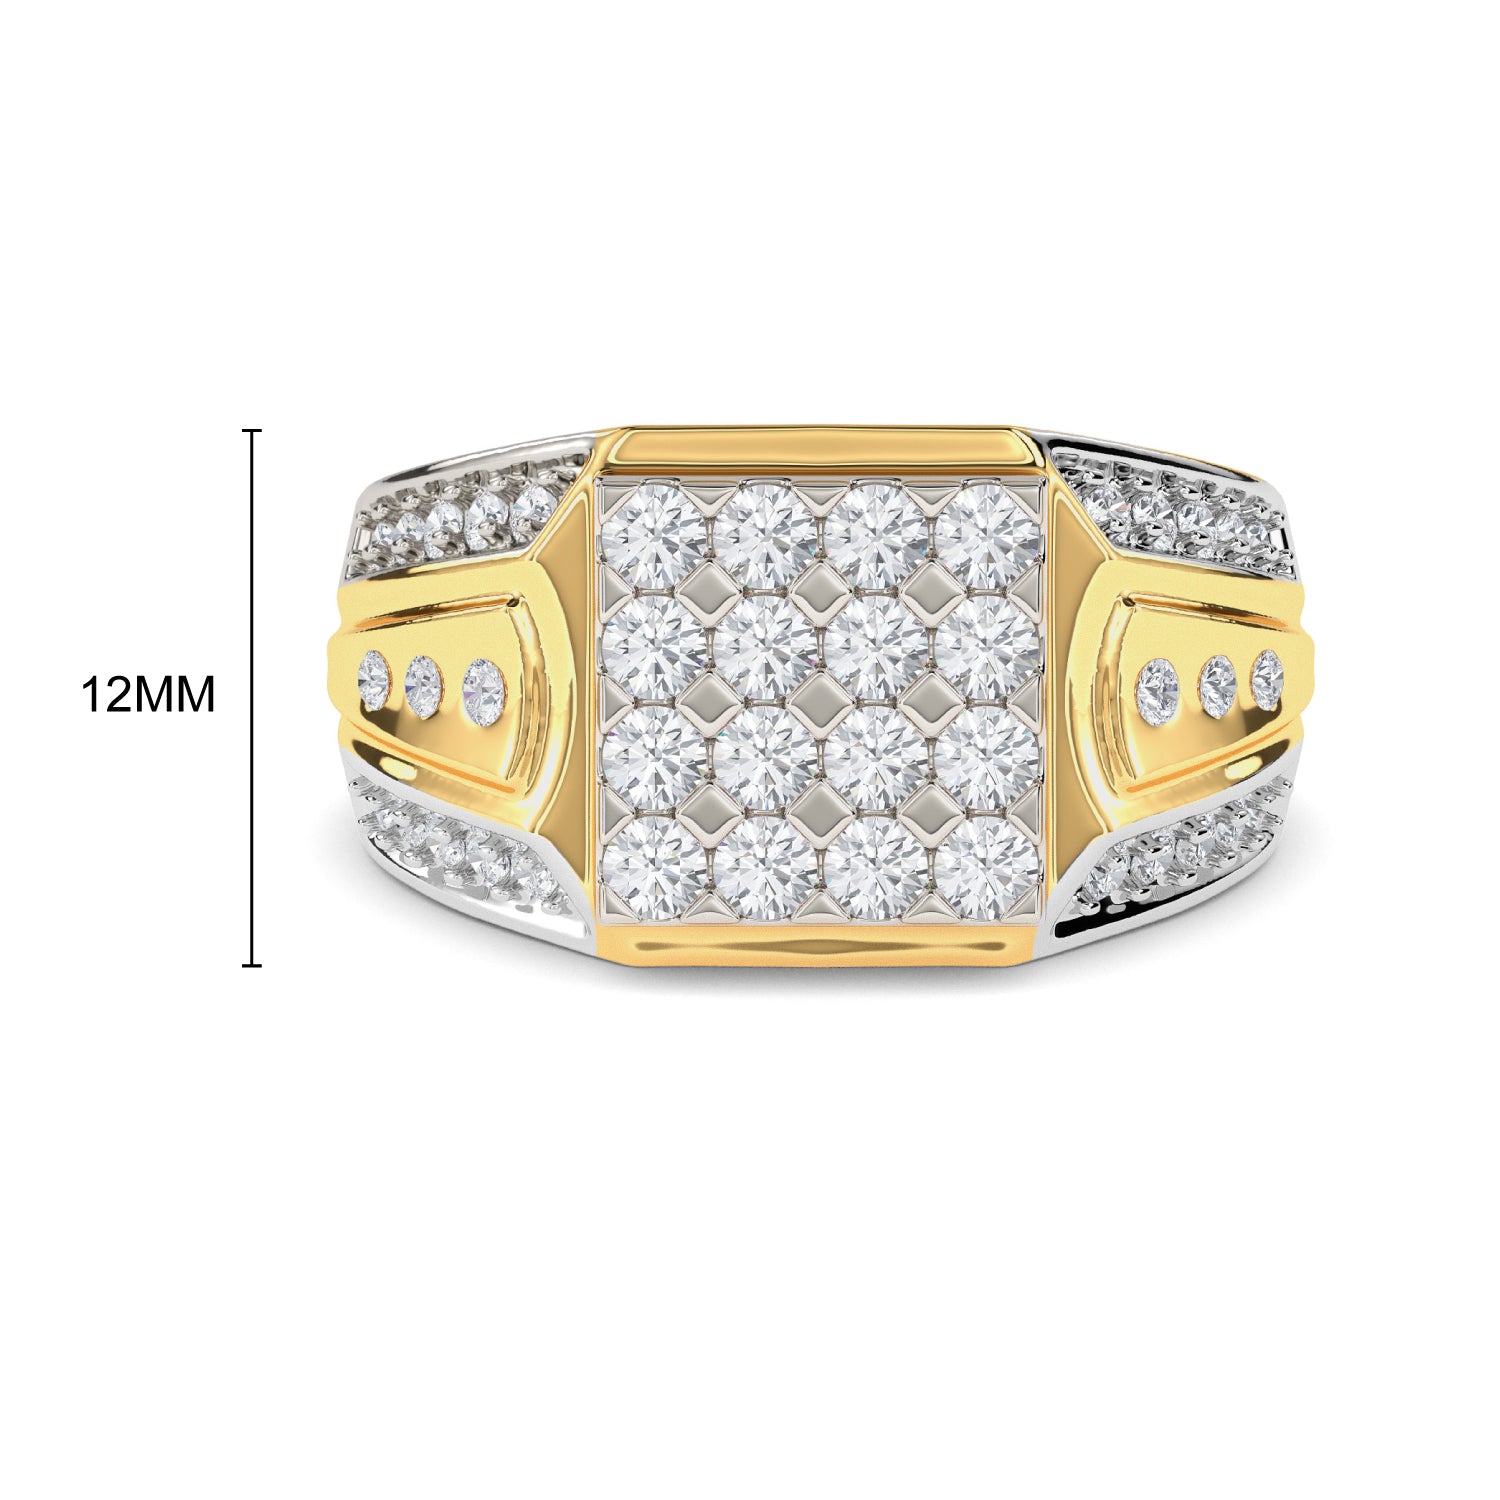 1.26 Carat Fancy Yellow Diamond Ring set in 14k White Gold - Monarch Jewels  Alaska